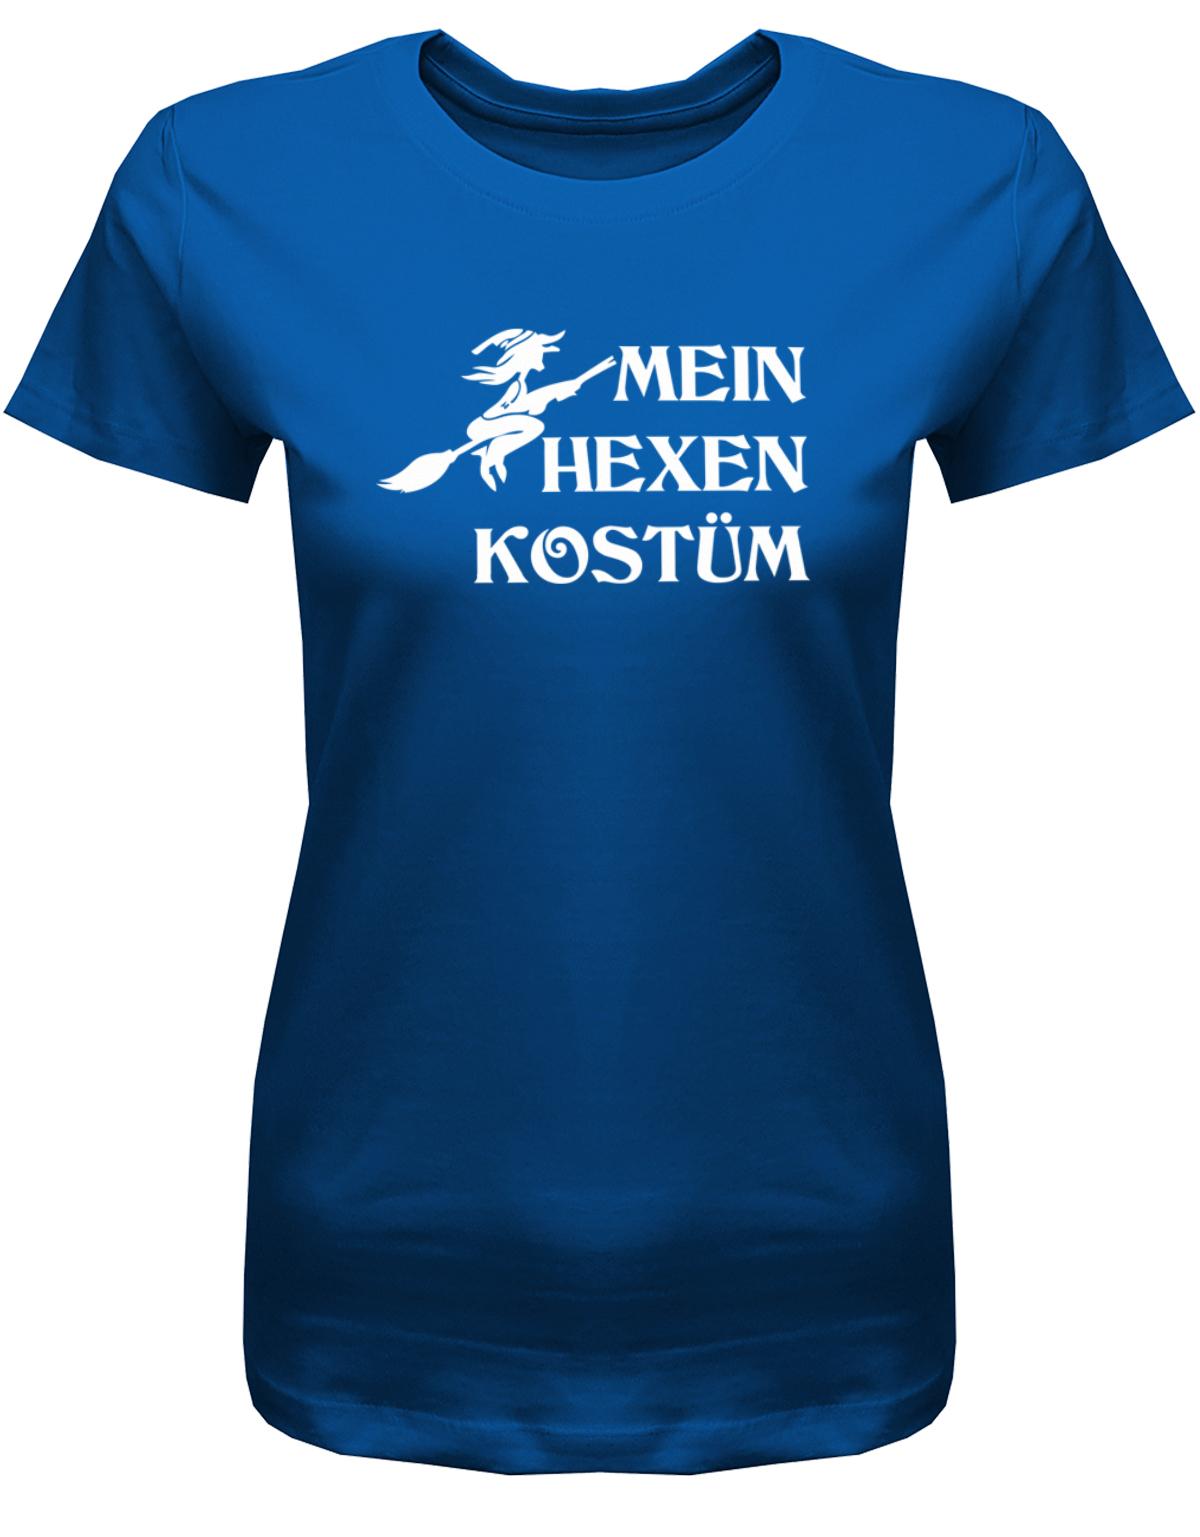 Mein-hexen-Kost-m-Damen-Shirt-Fasching-Karneval-Royalblau